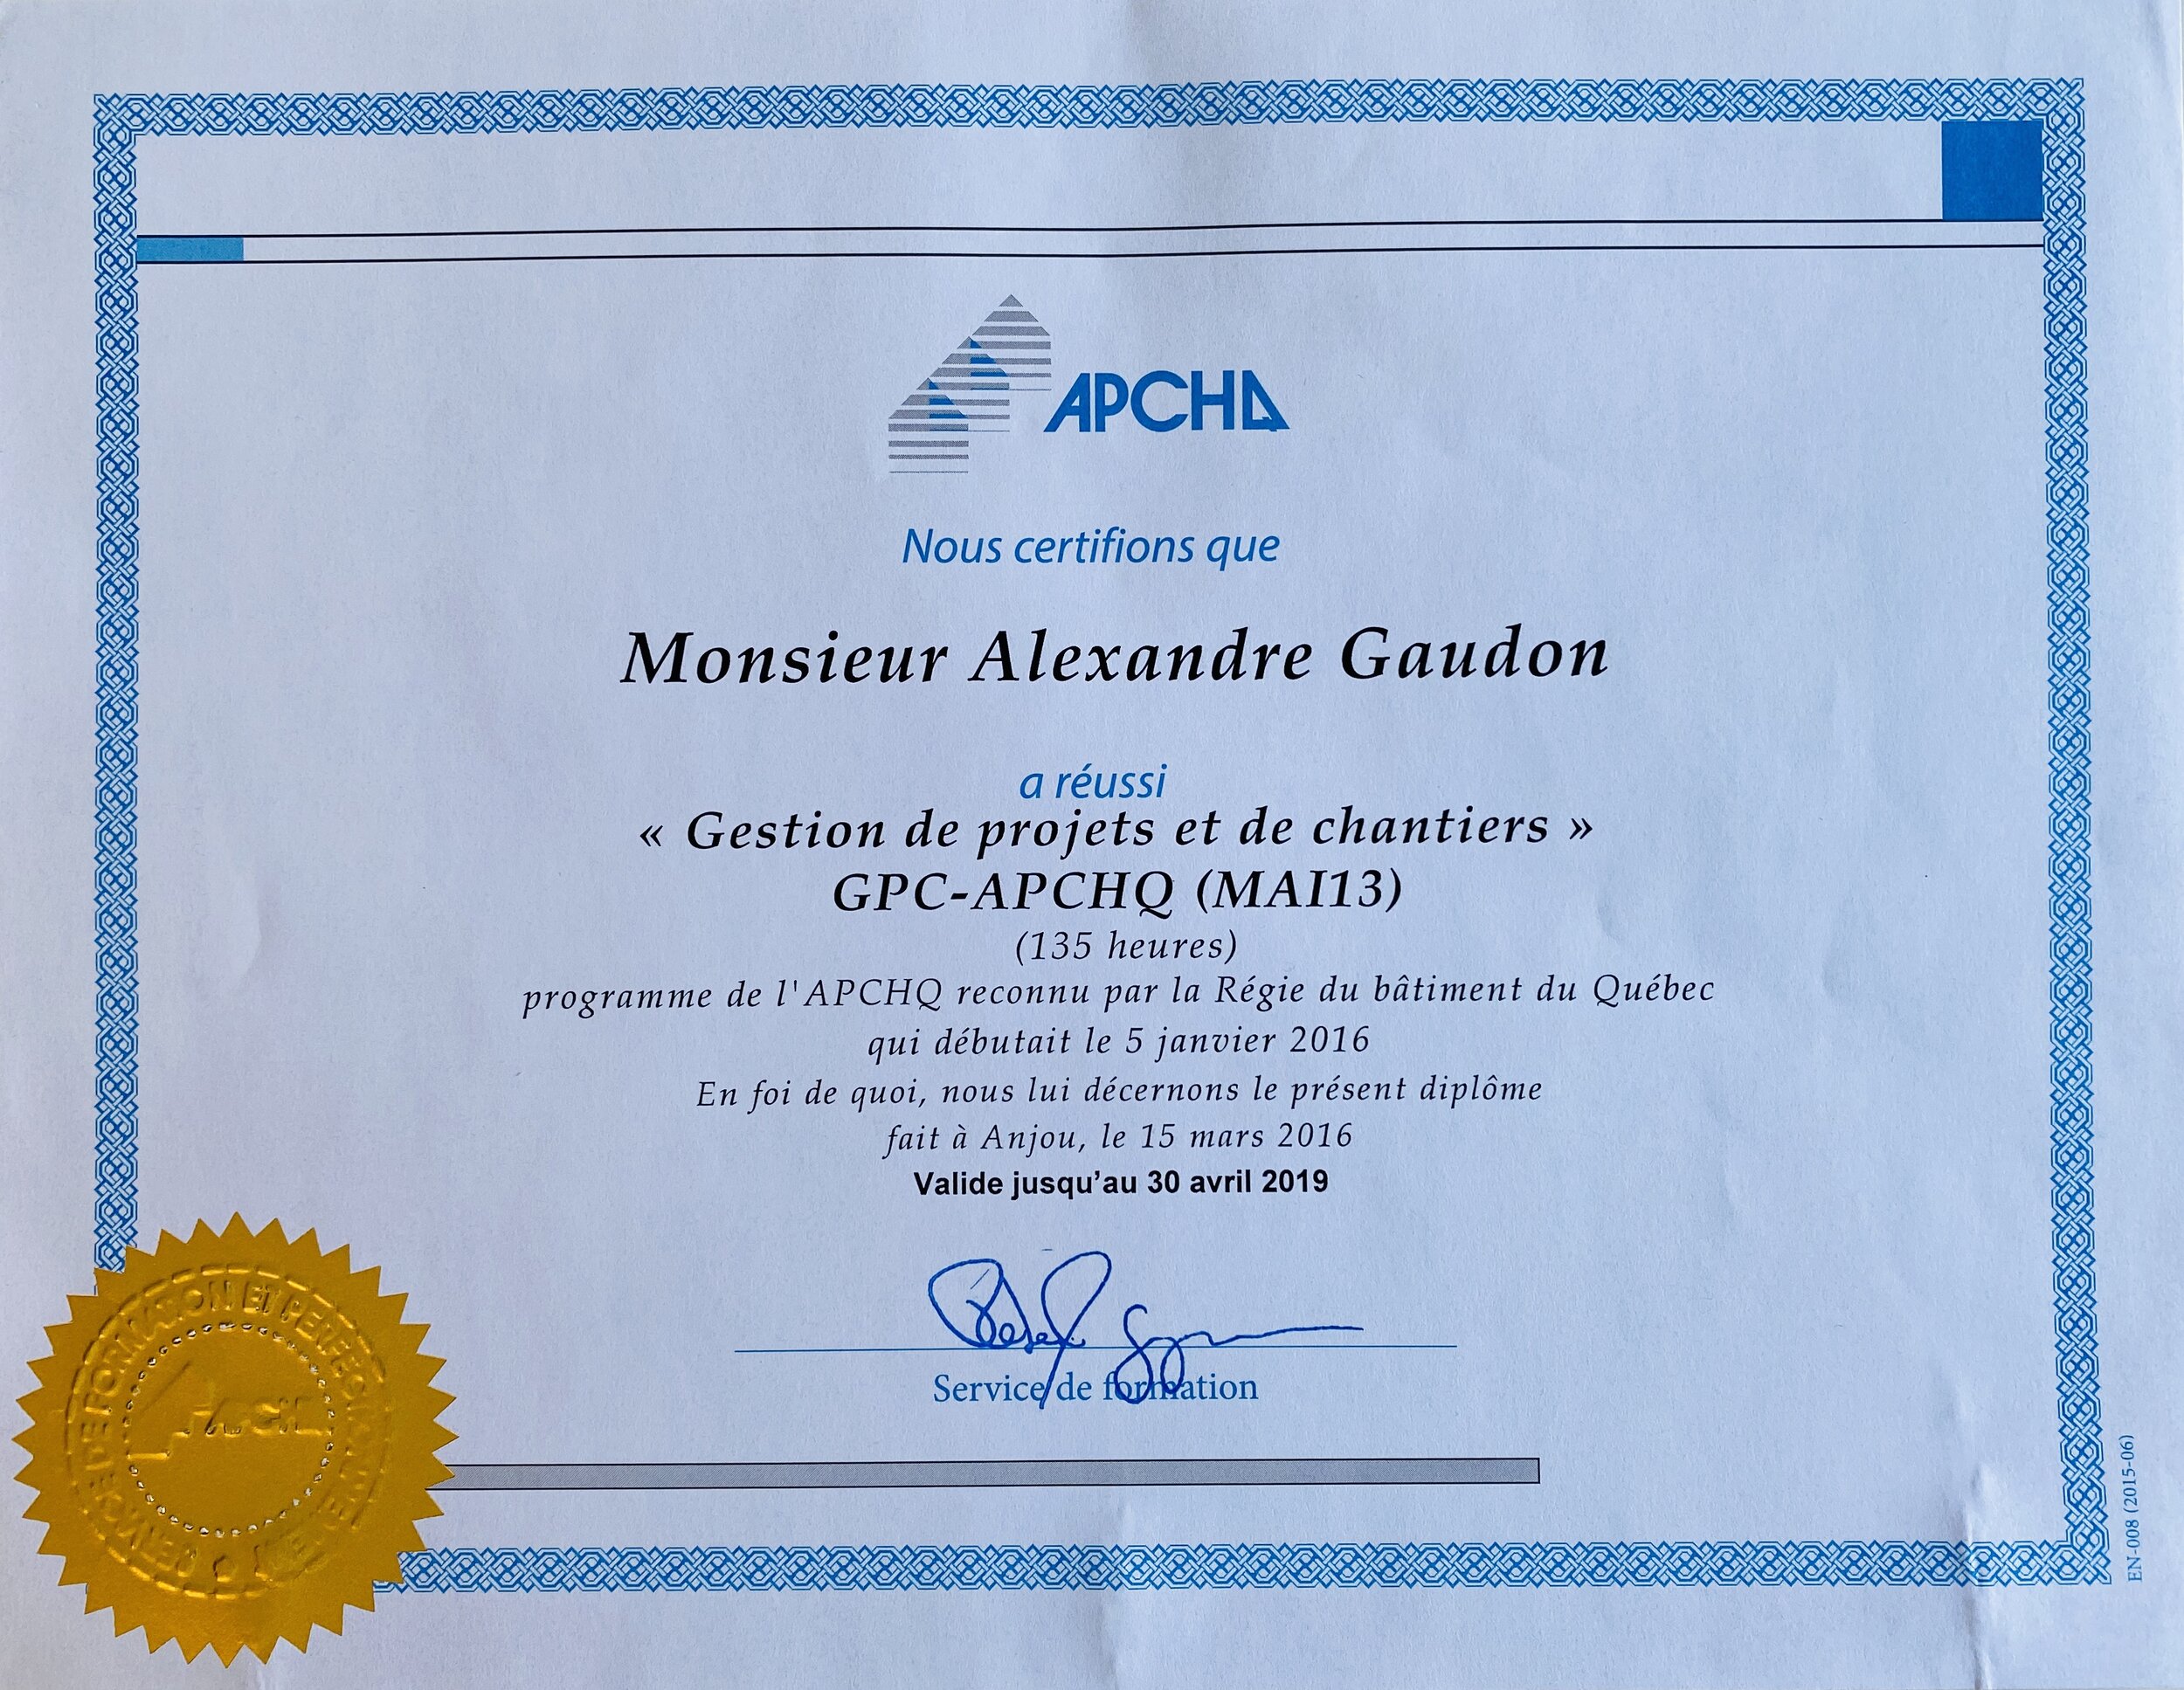 APCHQ Certificates.jpg